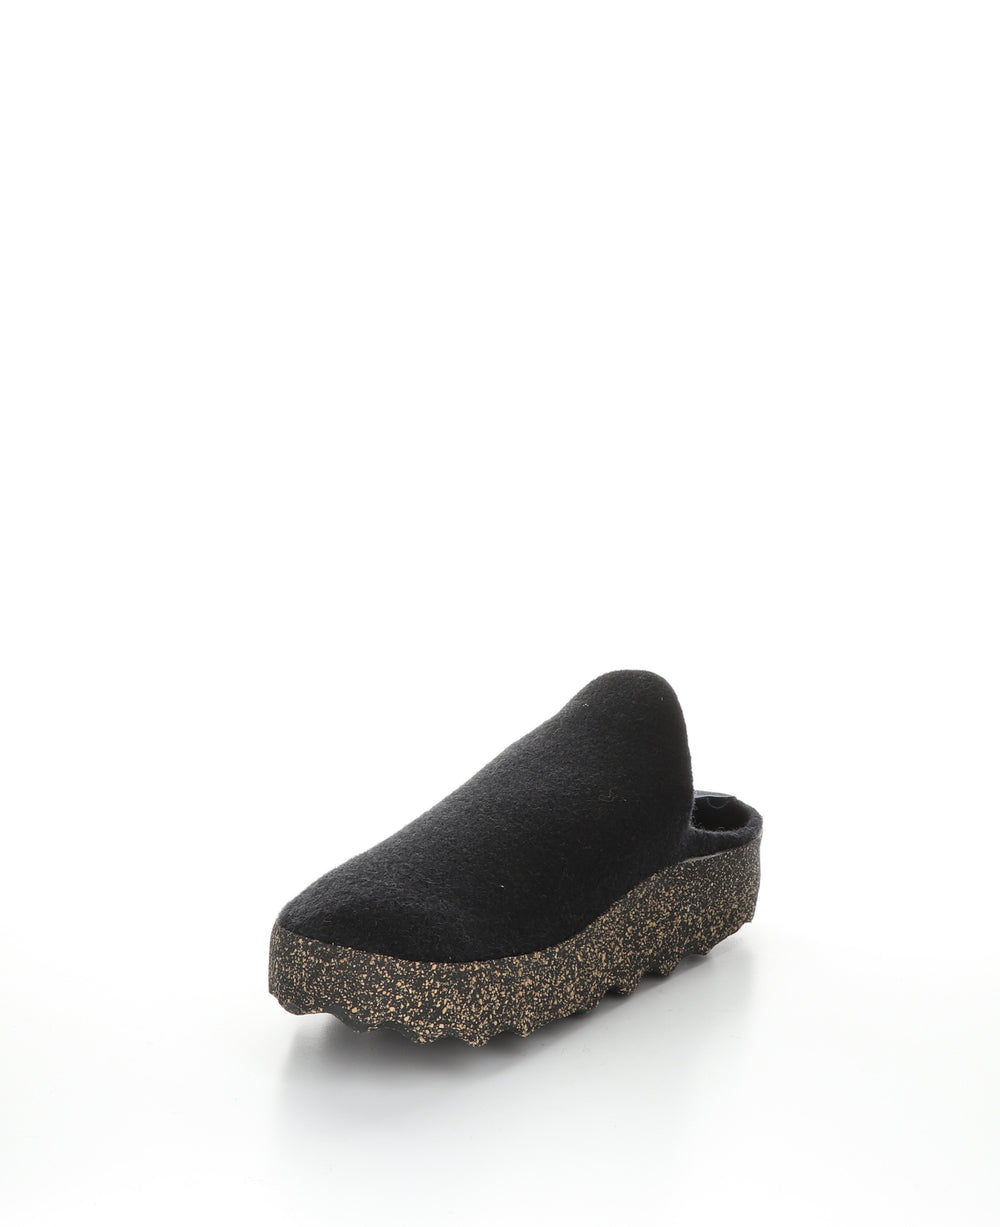 COME061ASPM Black Round Toe Shoes|COME061ASPM Chaussures à Bout Rond in Noir